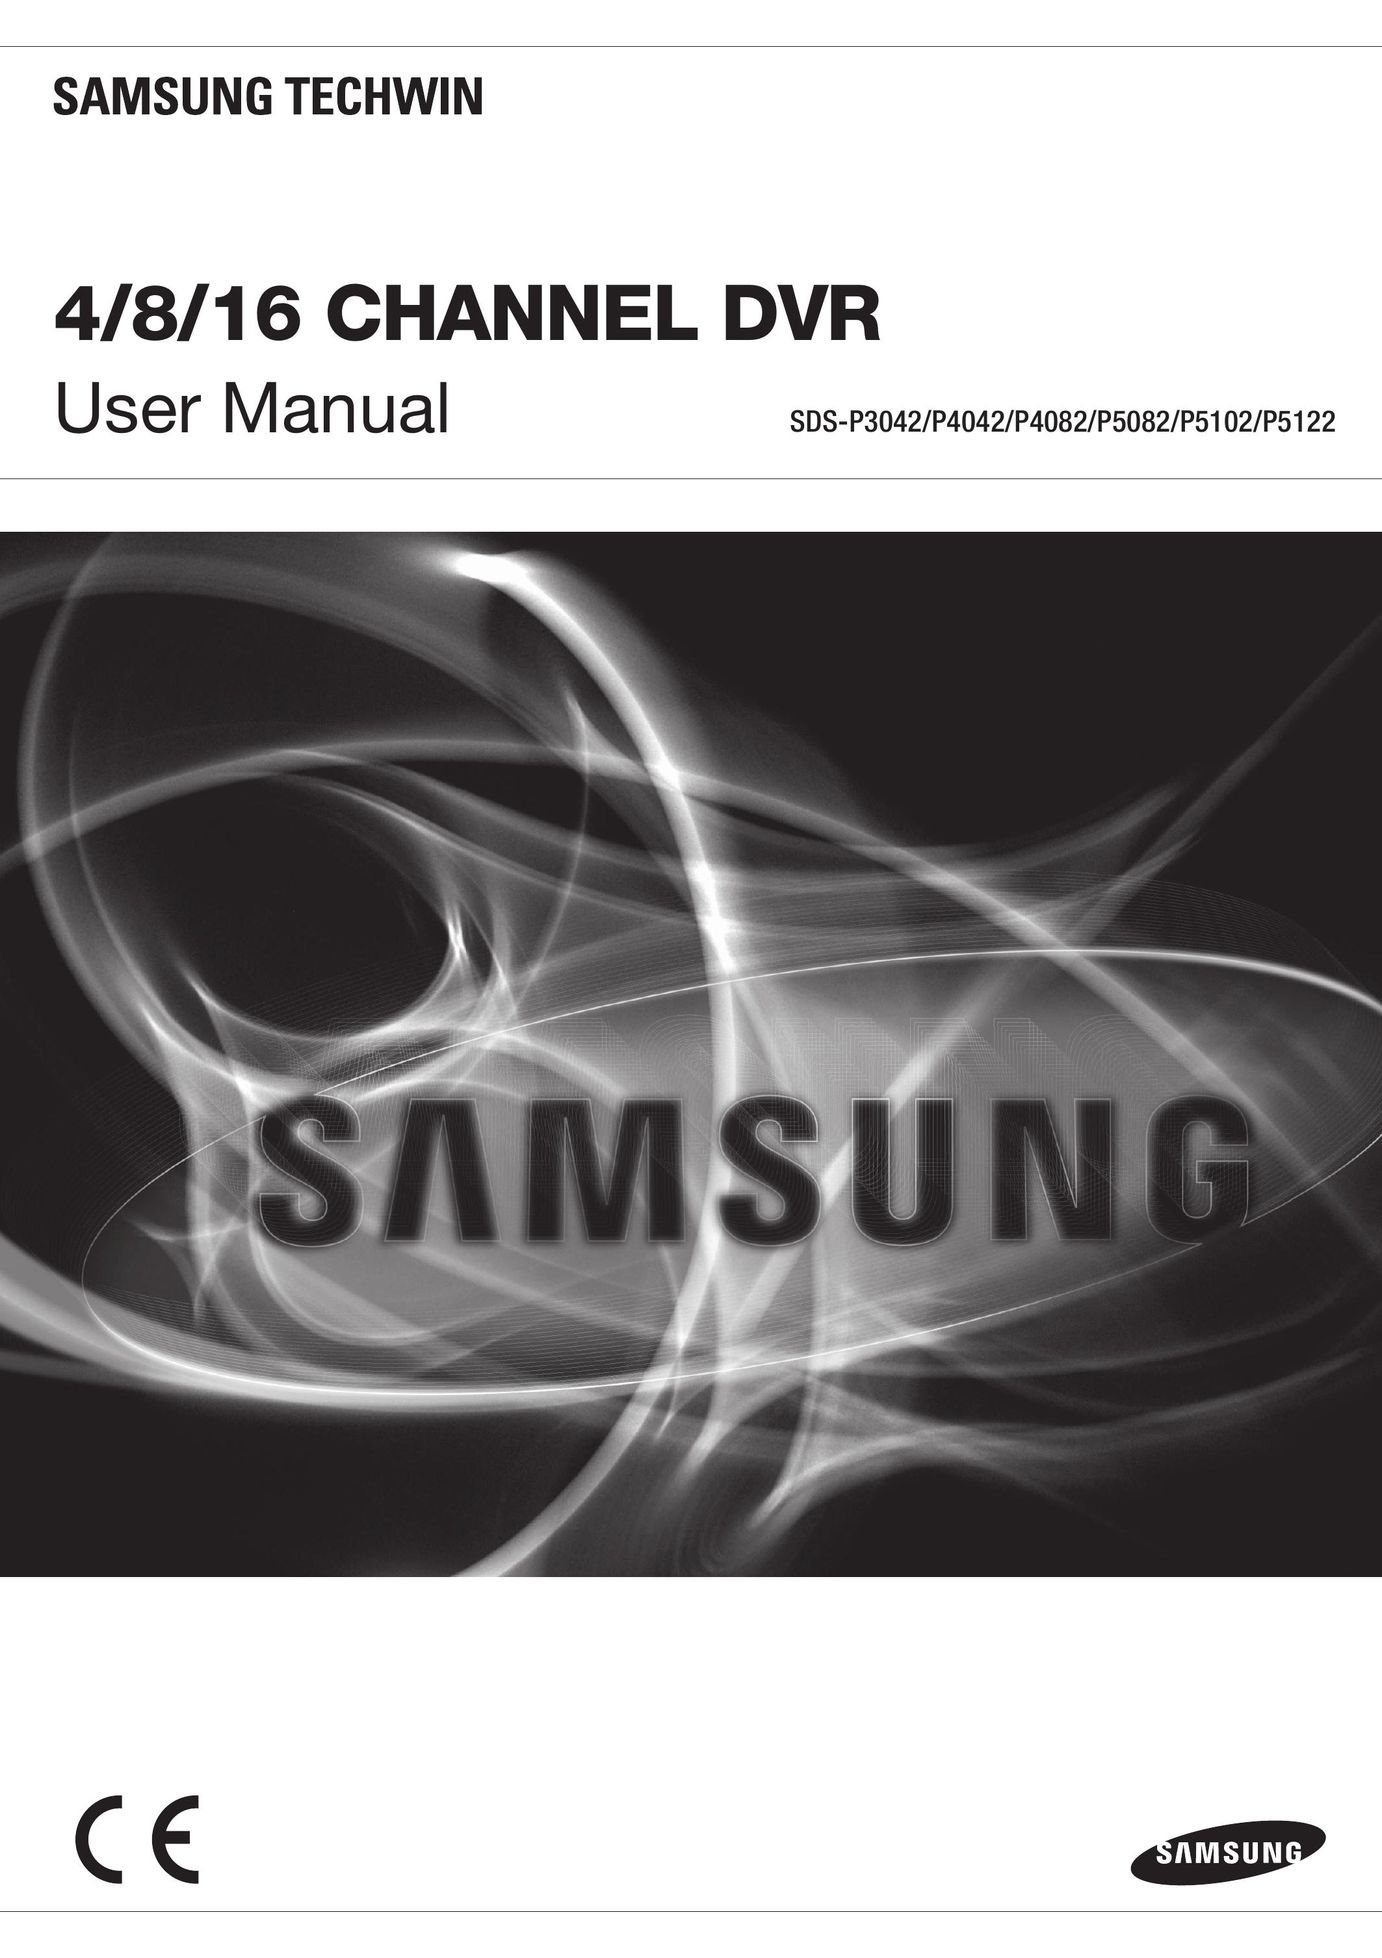 Samsung SDS-P4082 DVR User Manual